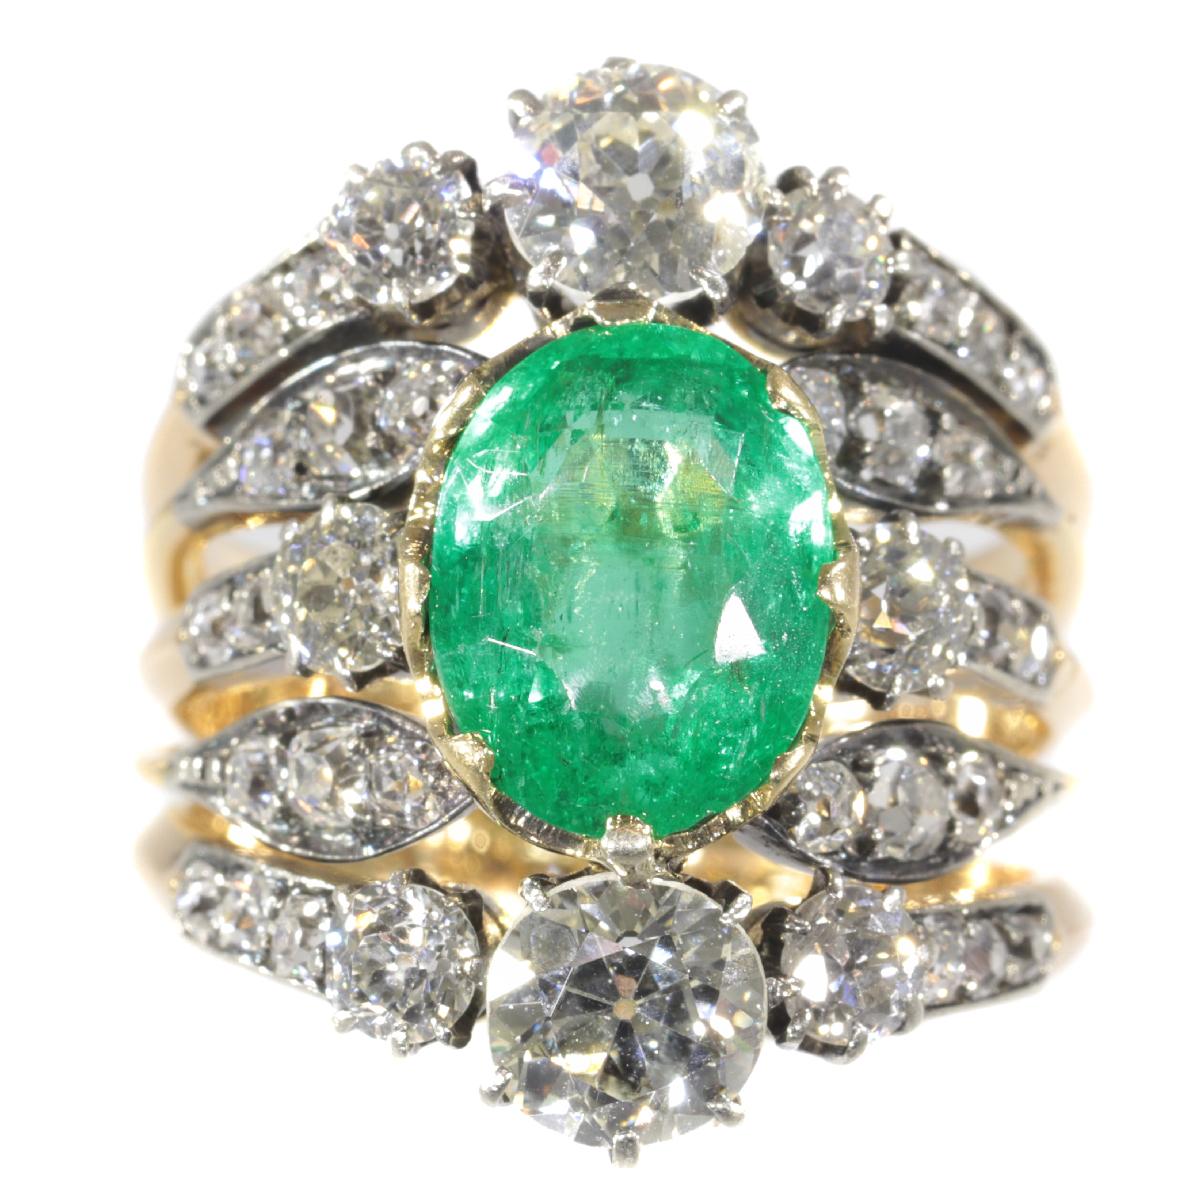 Women's True Eyecatcher Victorian Antique Ring with a 3.50 Carat Ovalcut Emerald